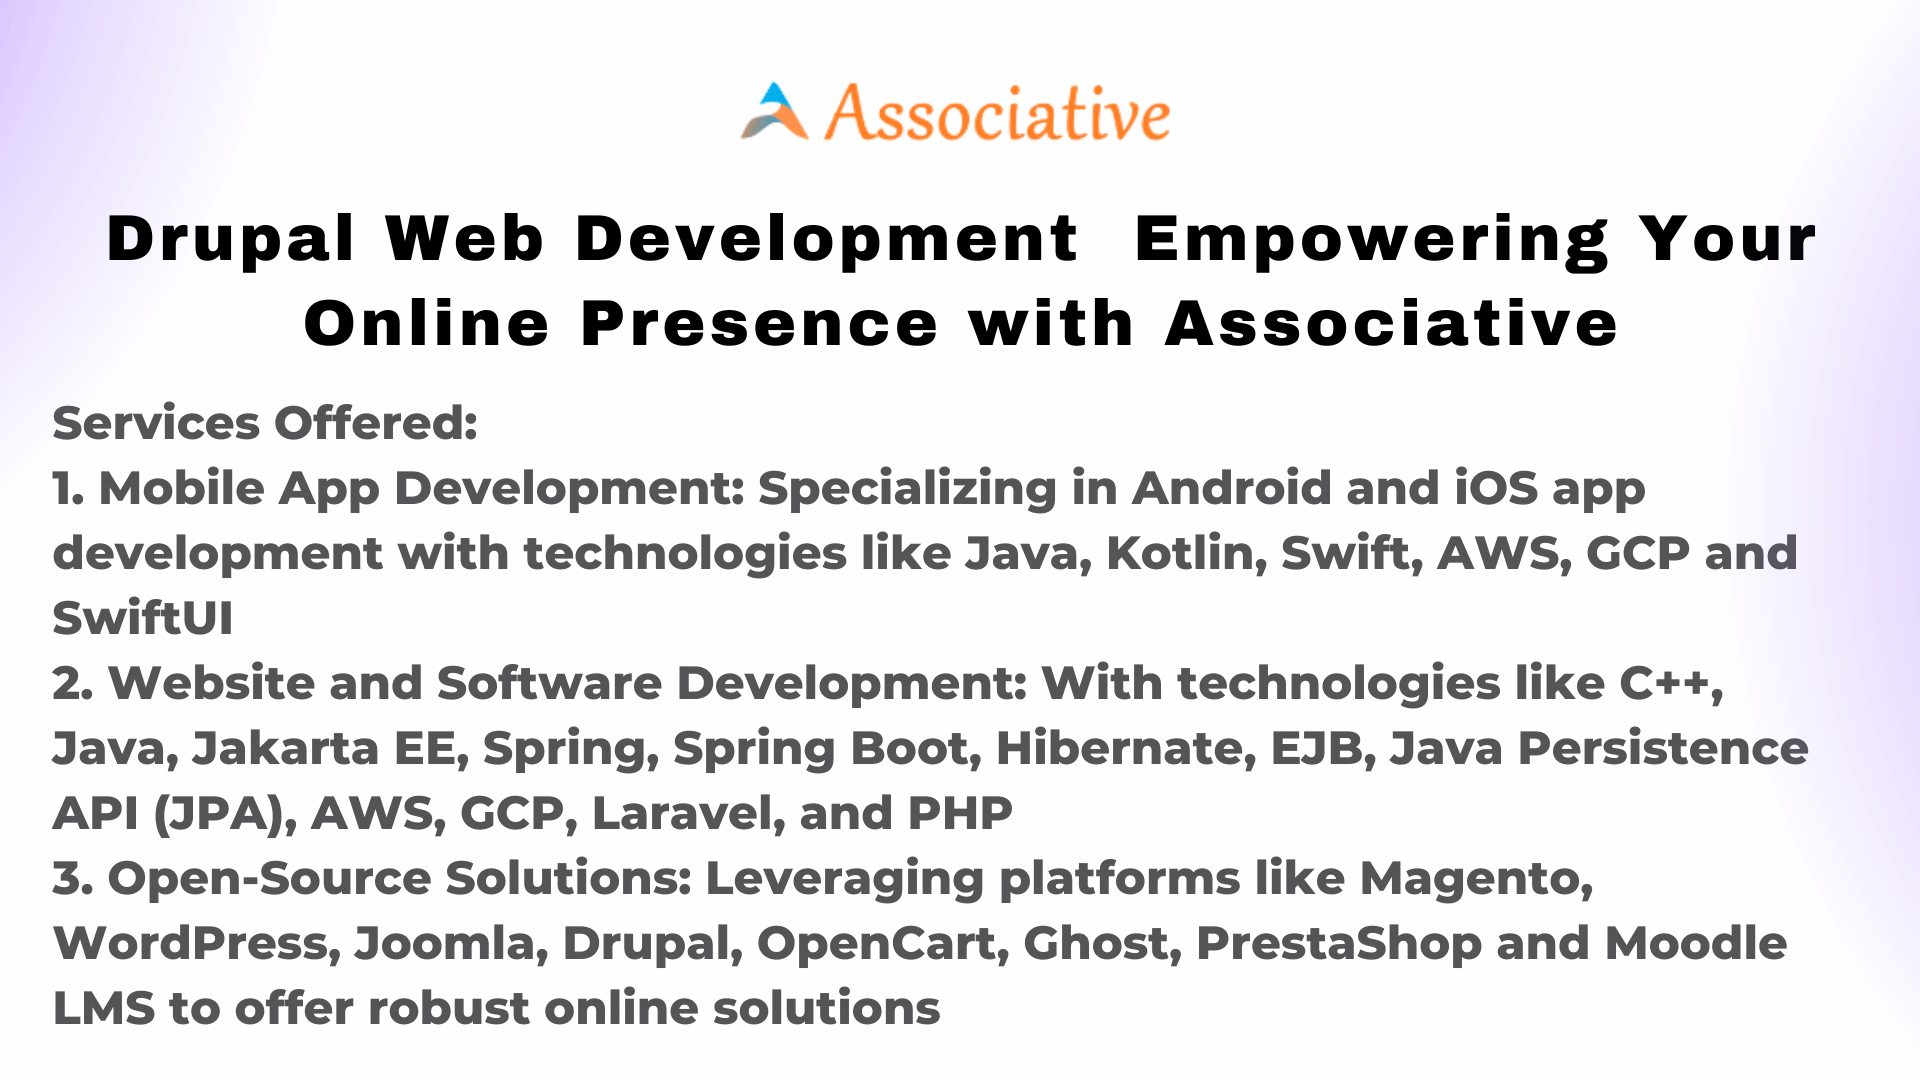 Drupal Web Development Empowering Your Online Presence with Associative